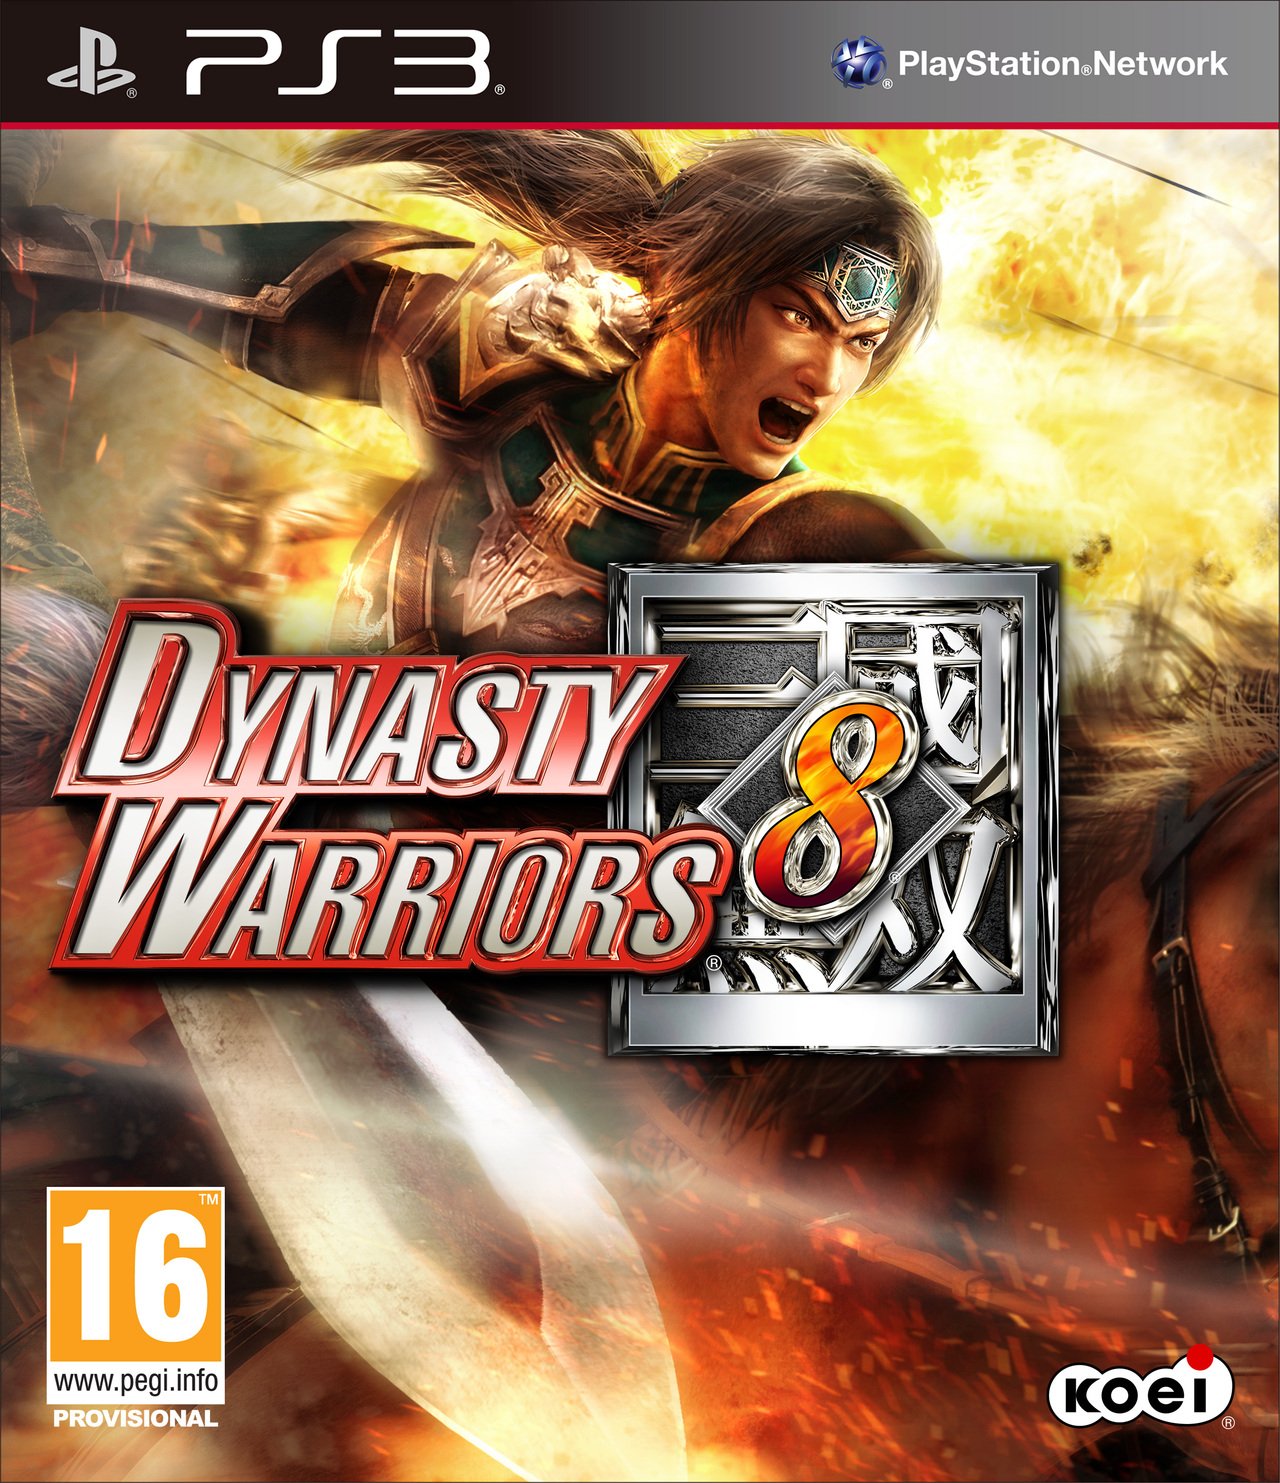 Caratula de Dynasty Warriors 8 para PlayStation 3